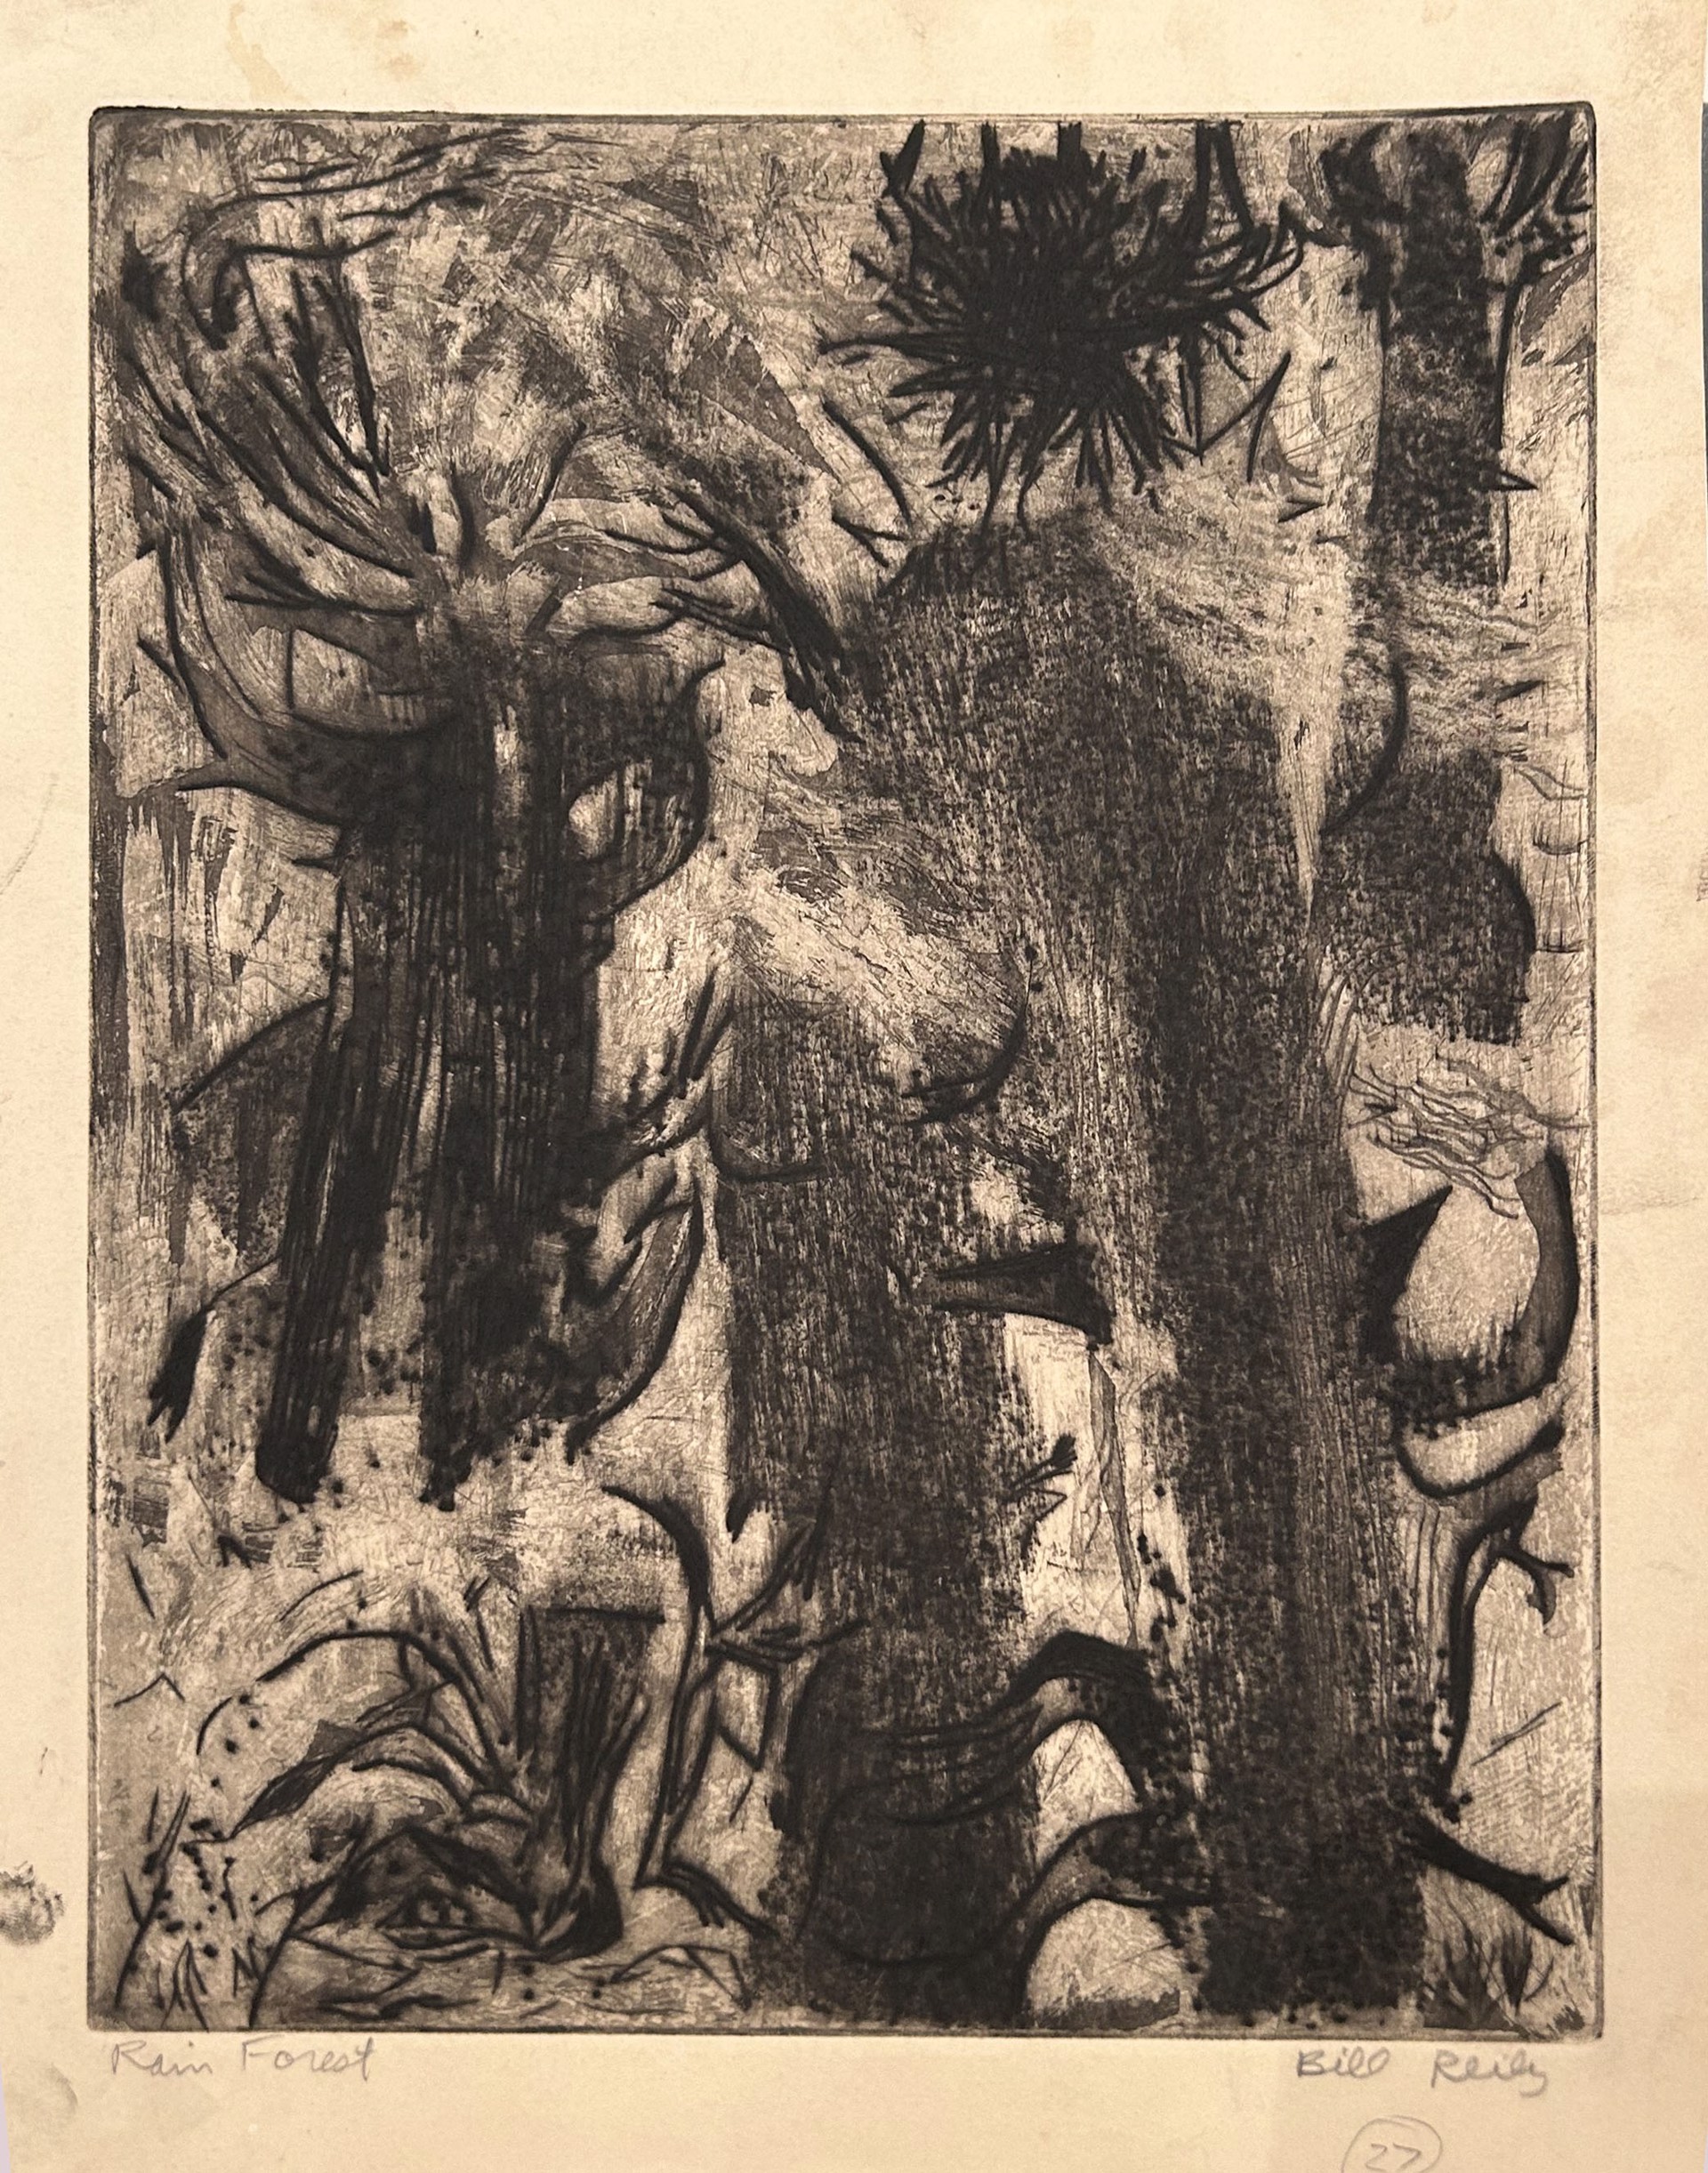 27d. Rain Forest by Bill Reily - Prints